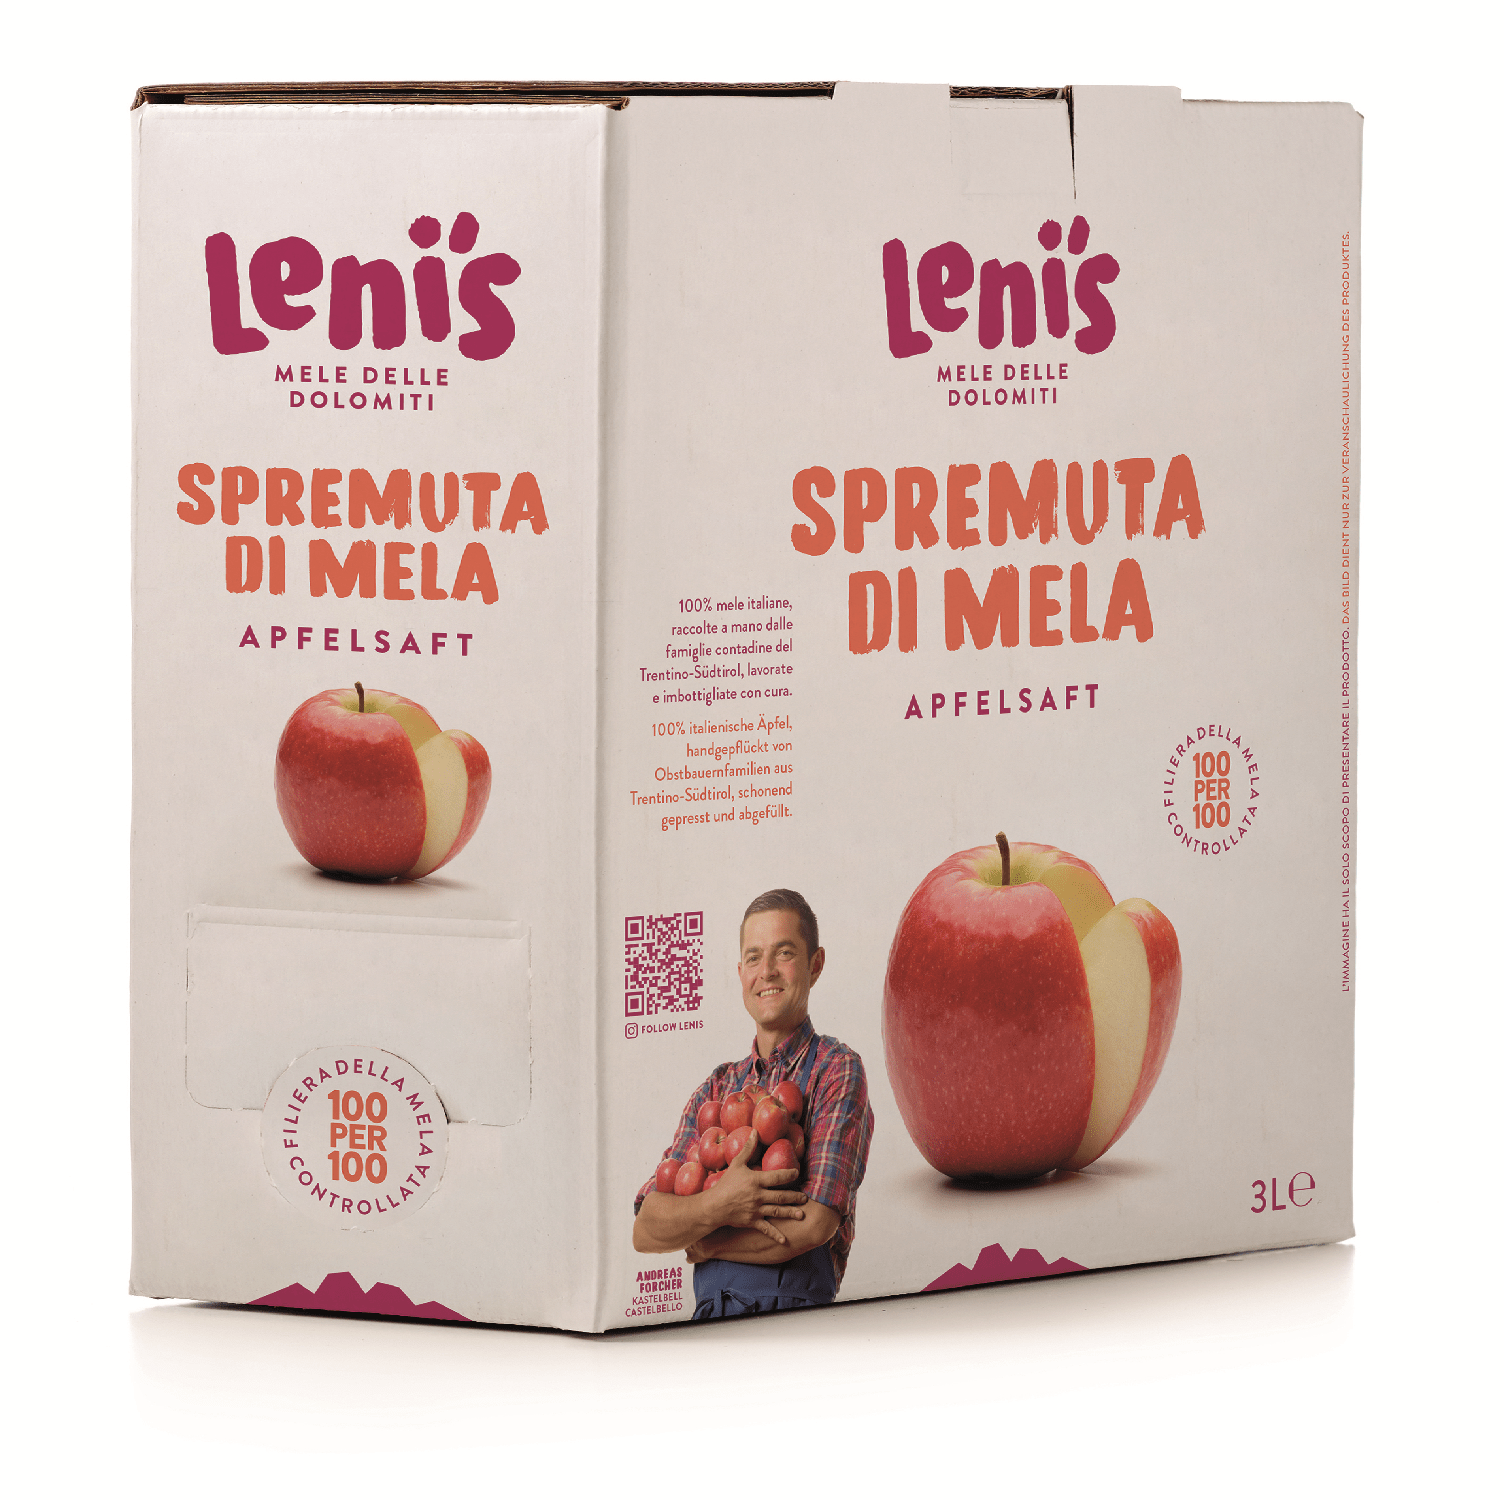 Apfelsaft Lenis 3 Liter 